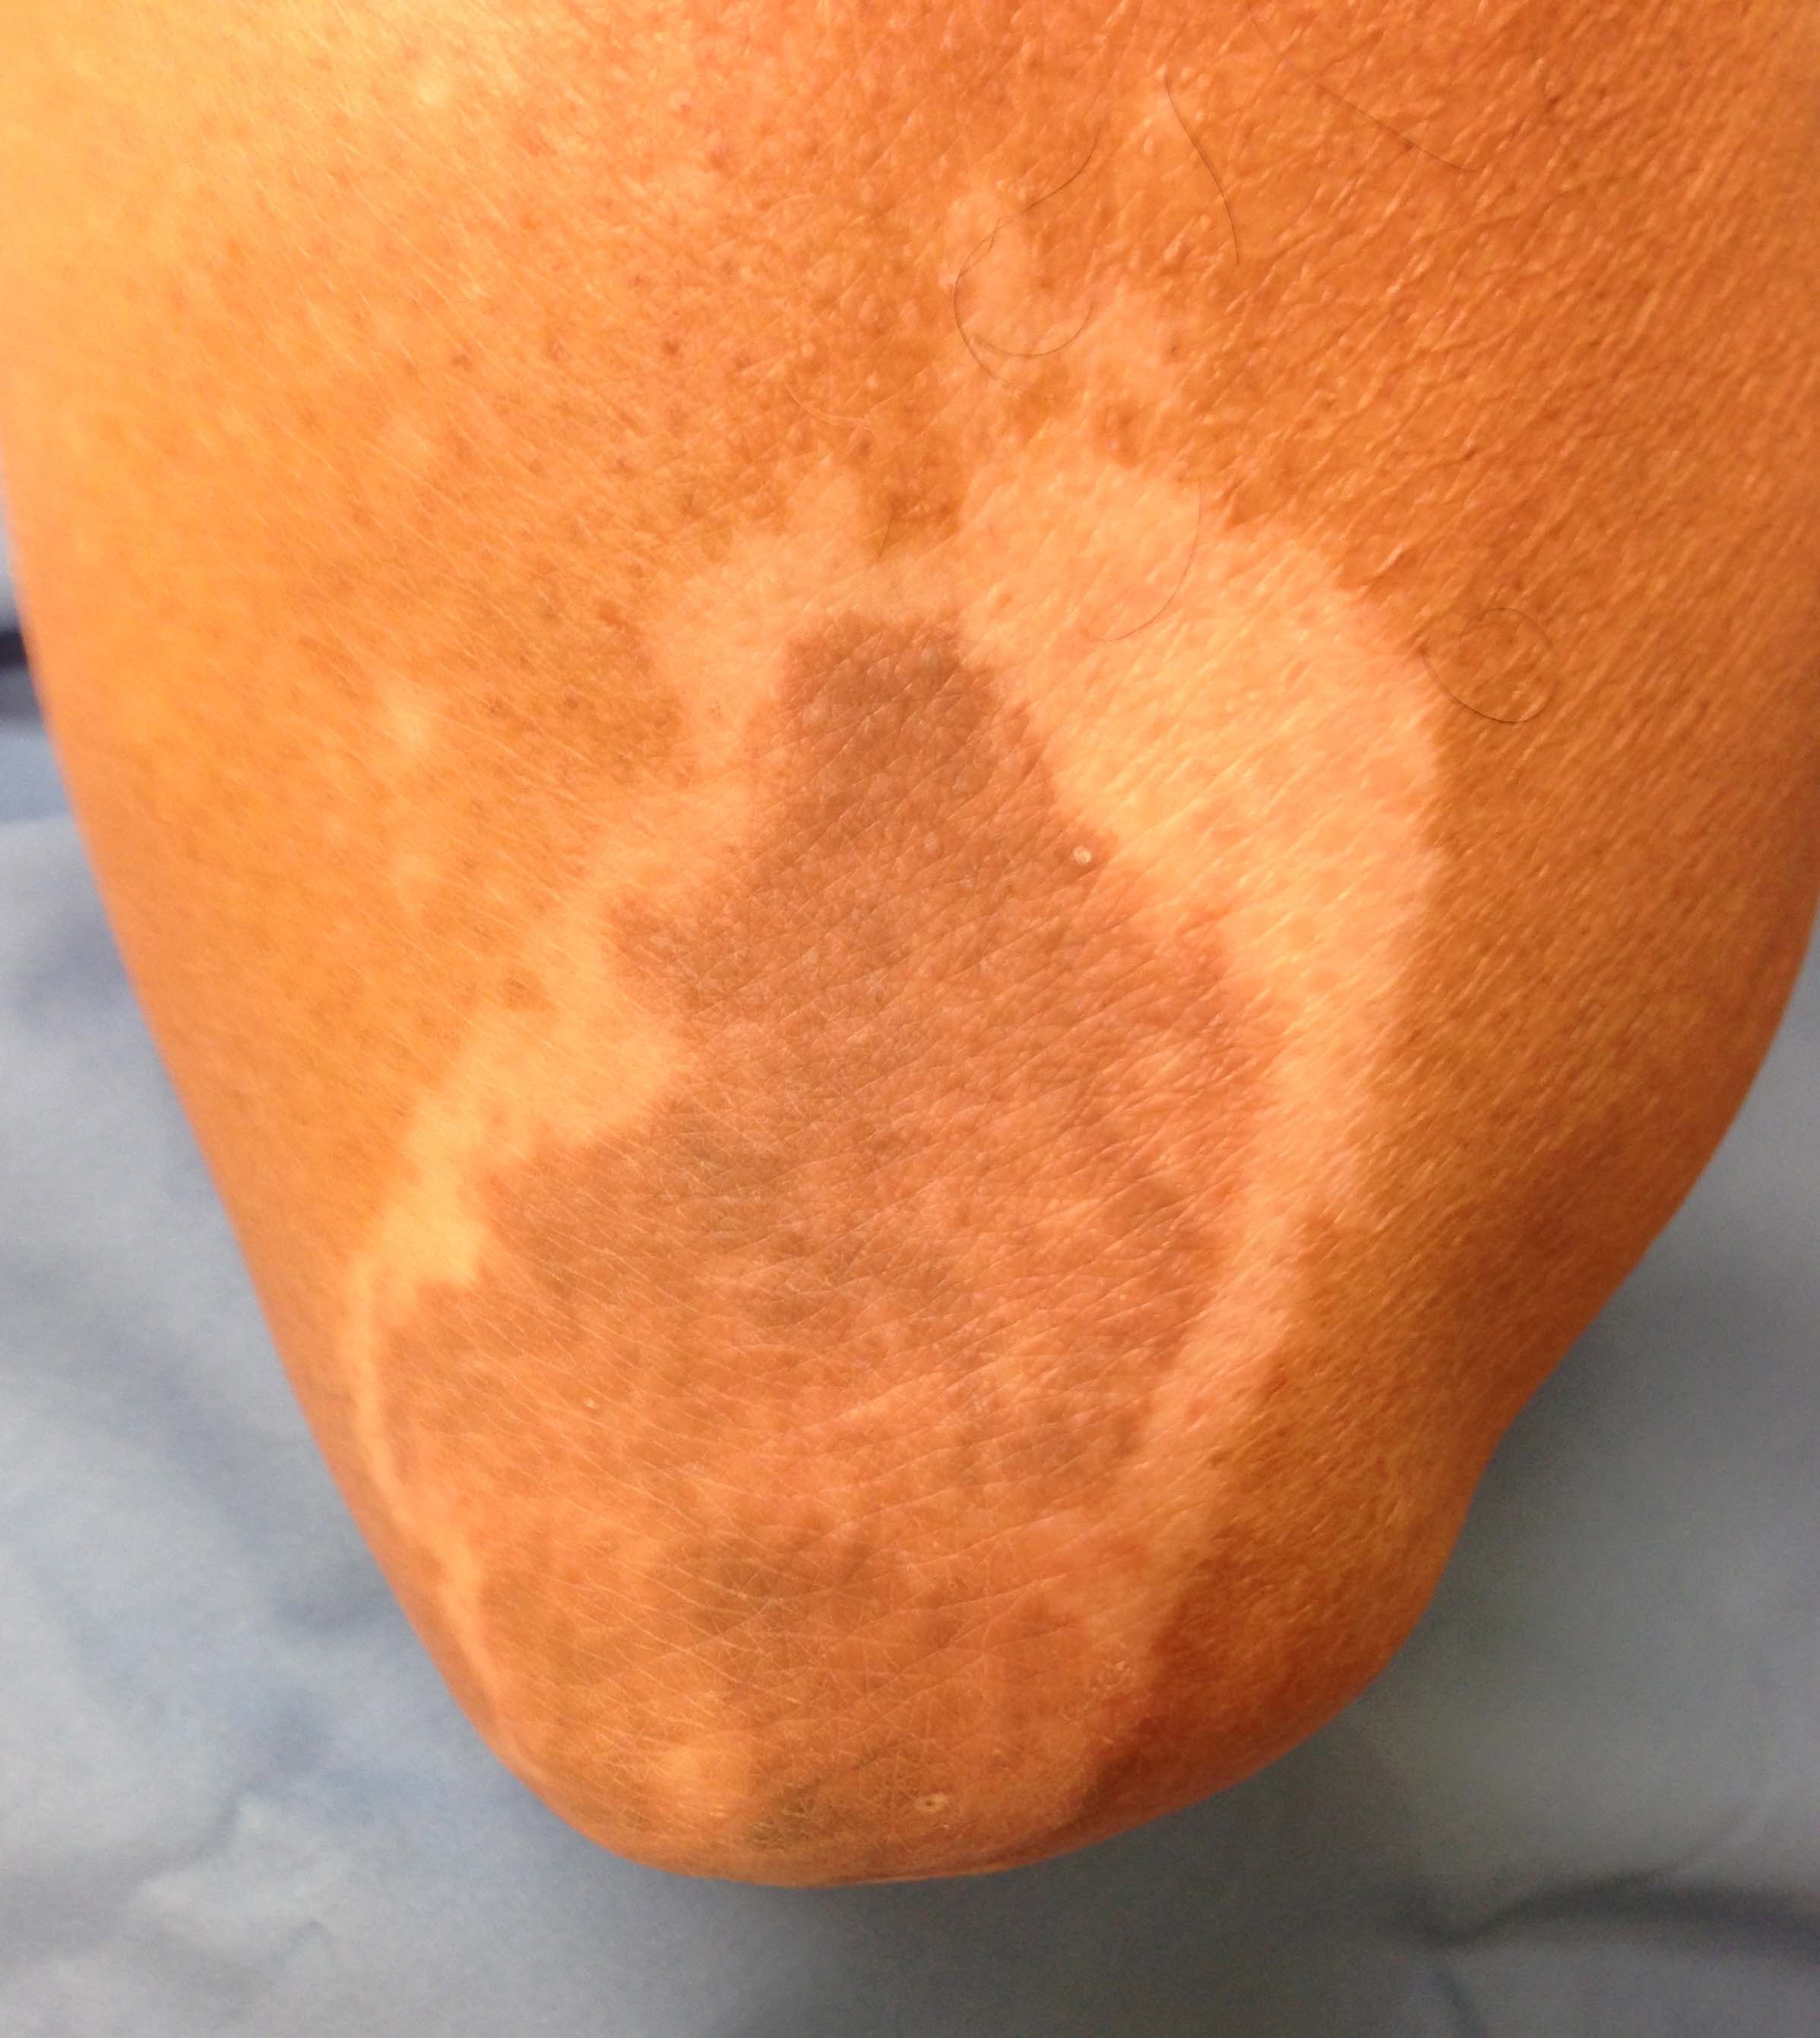 Tattoo vitiligo skin color